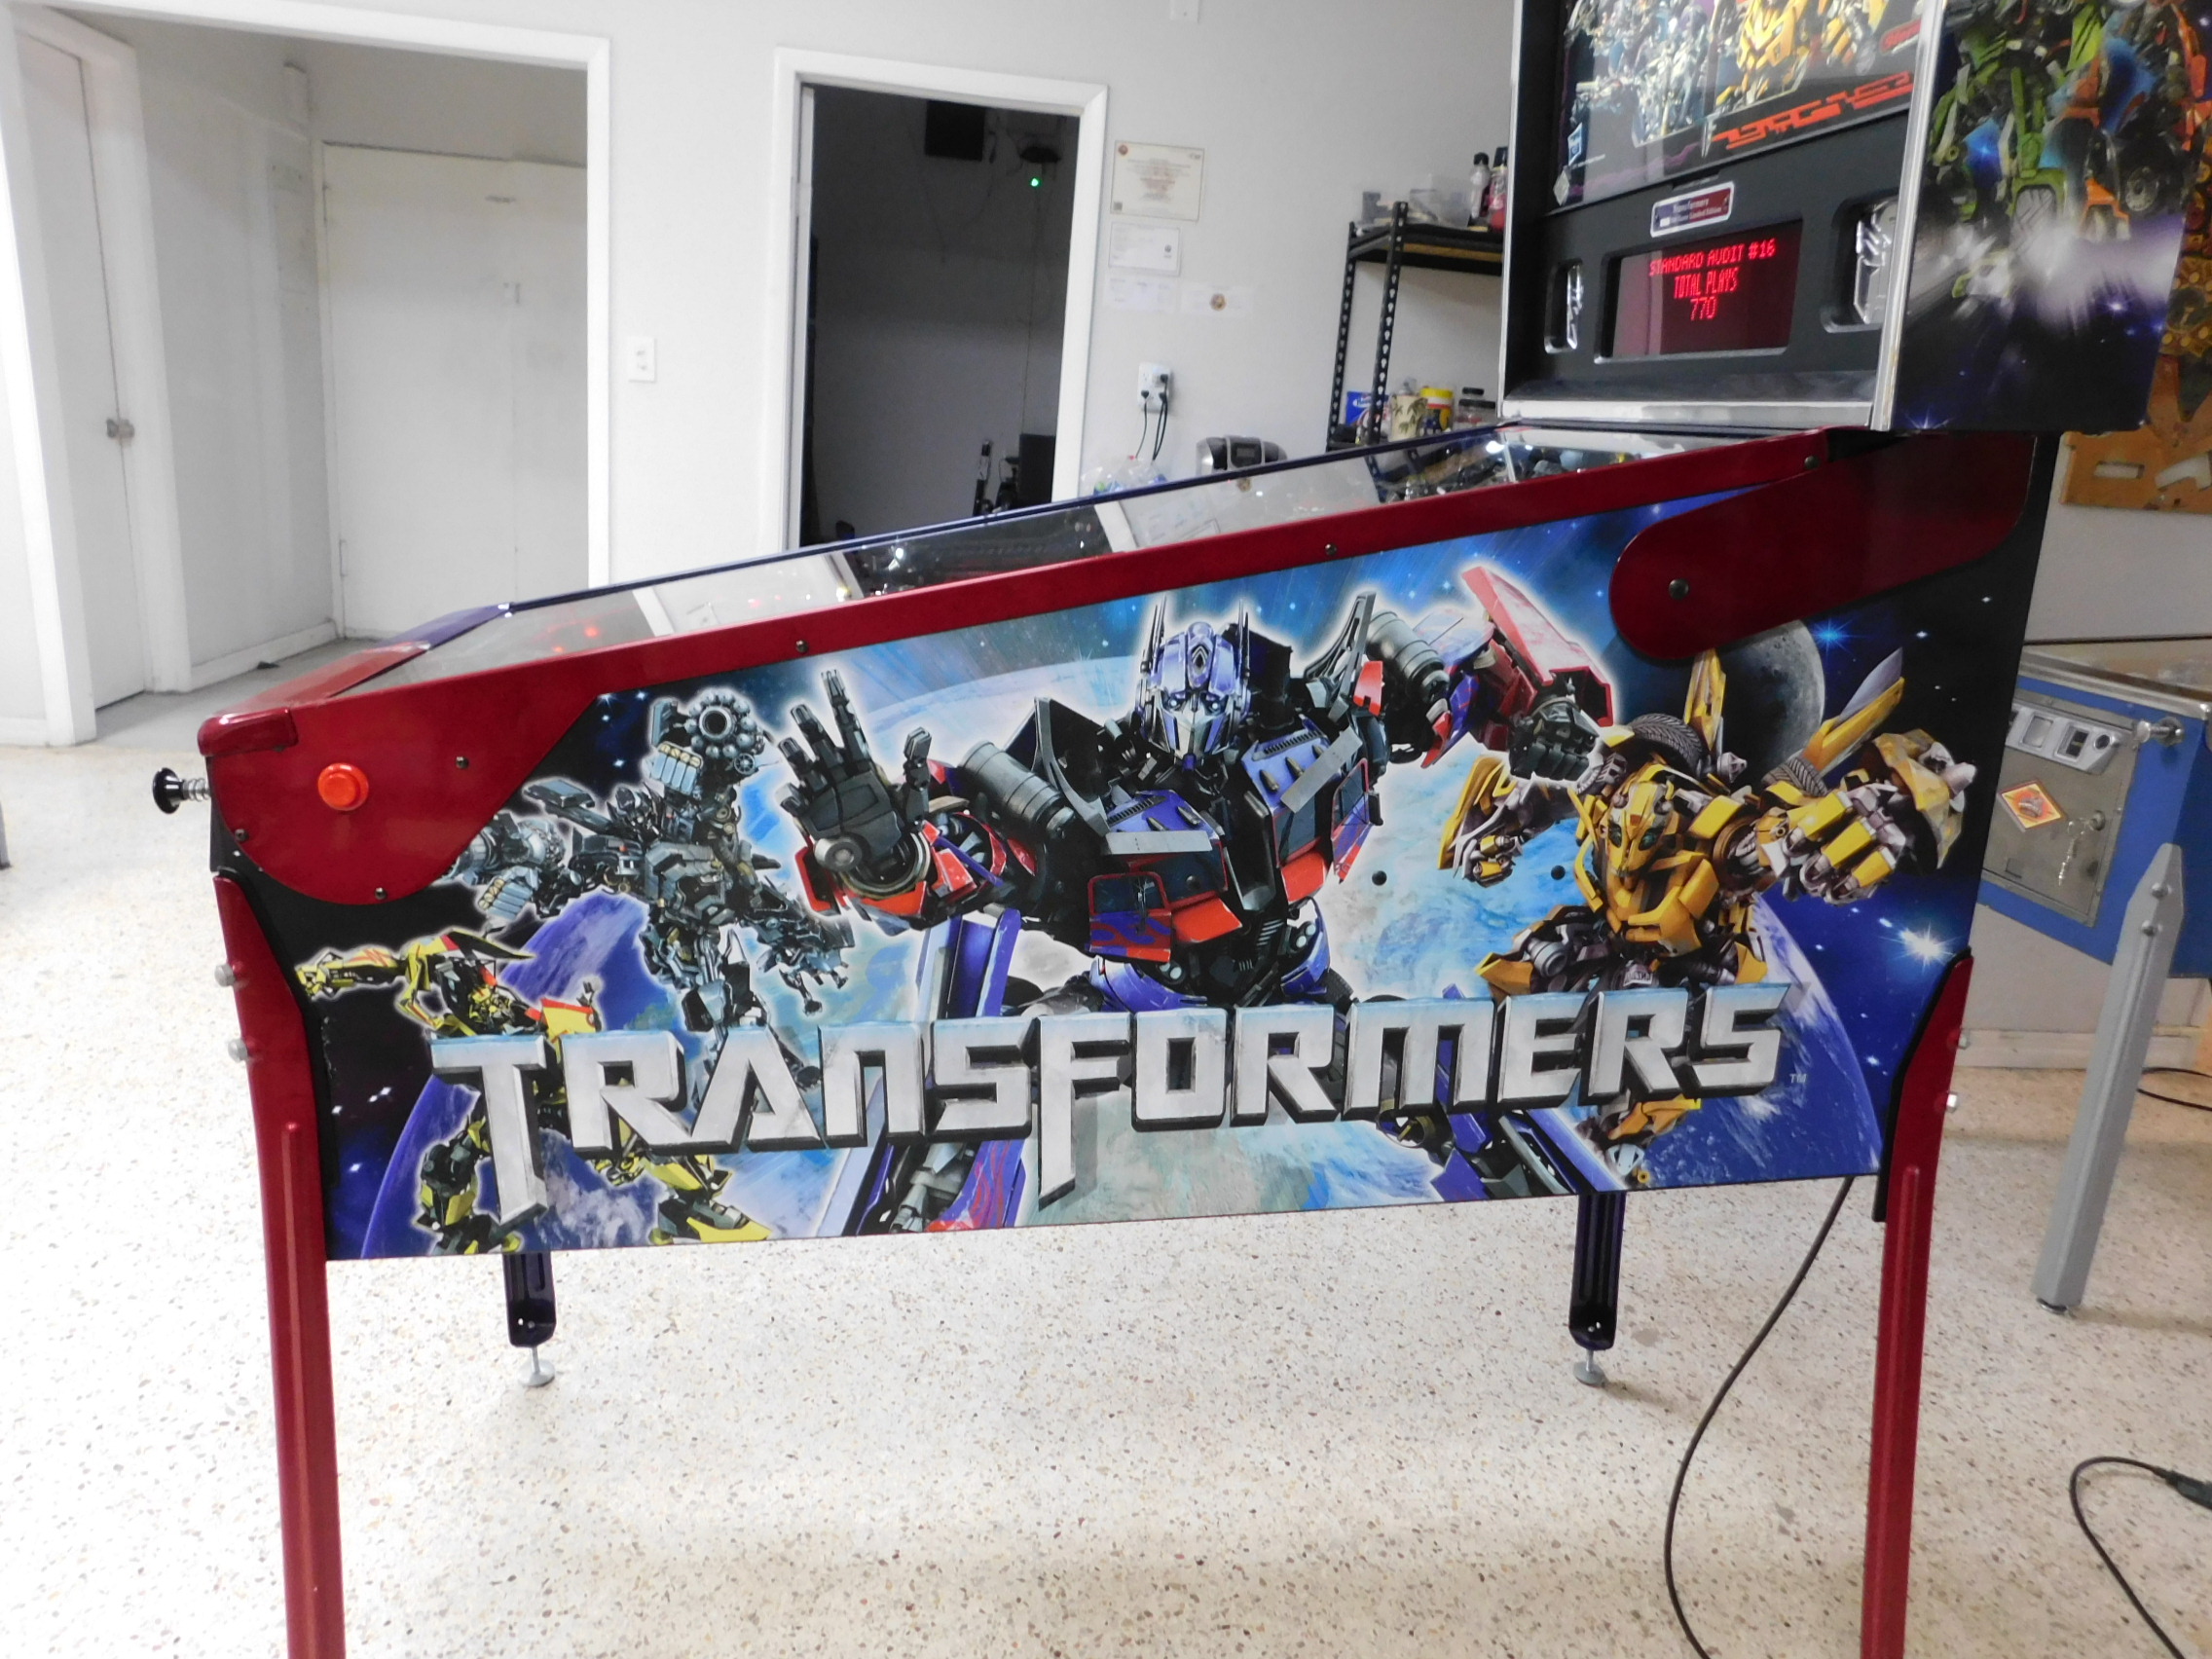 Pinball Restorations, Stern Transformers Limited Edition